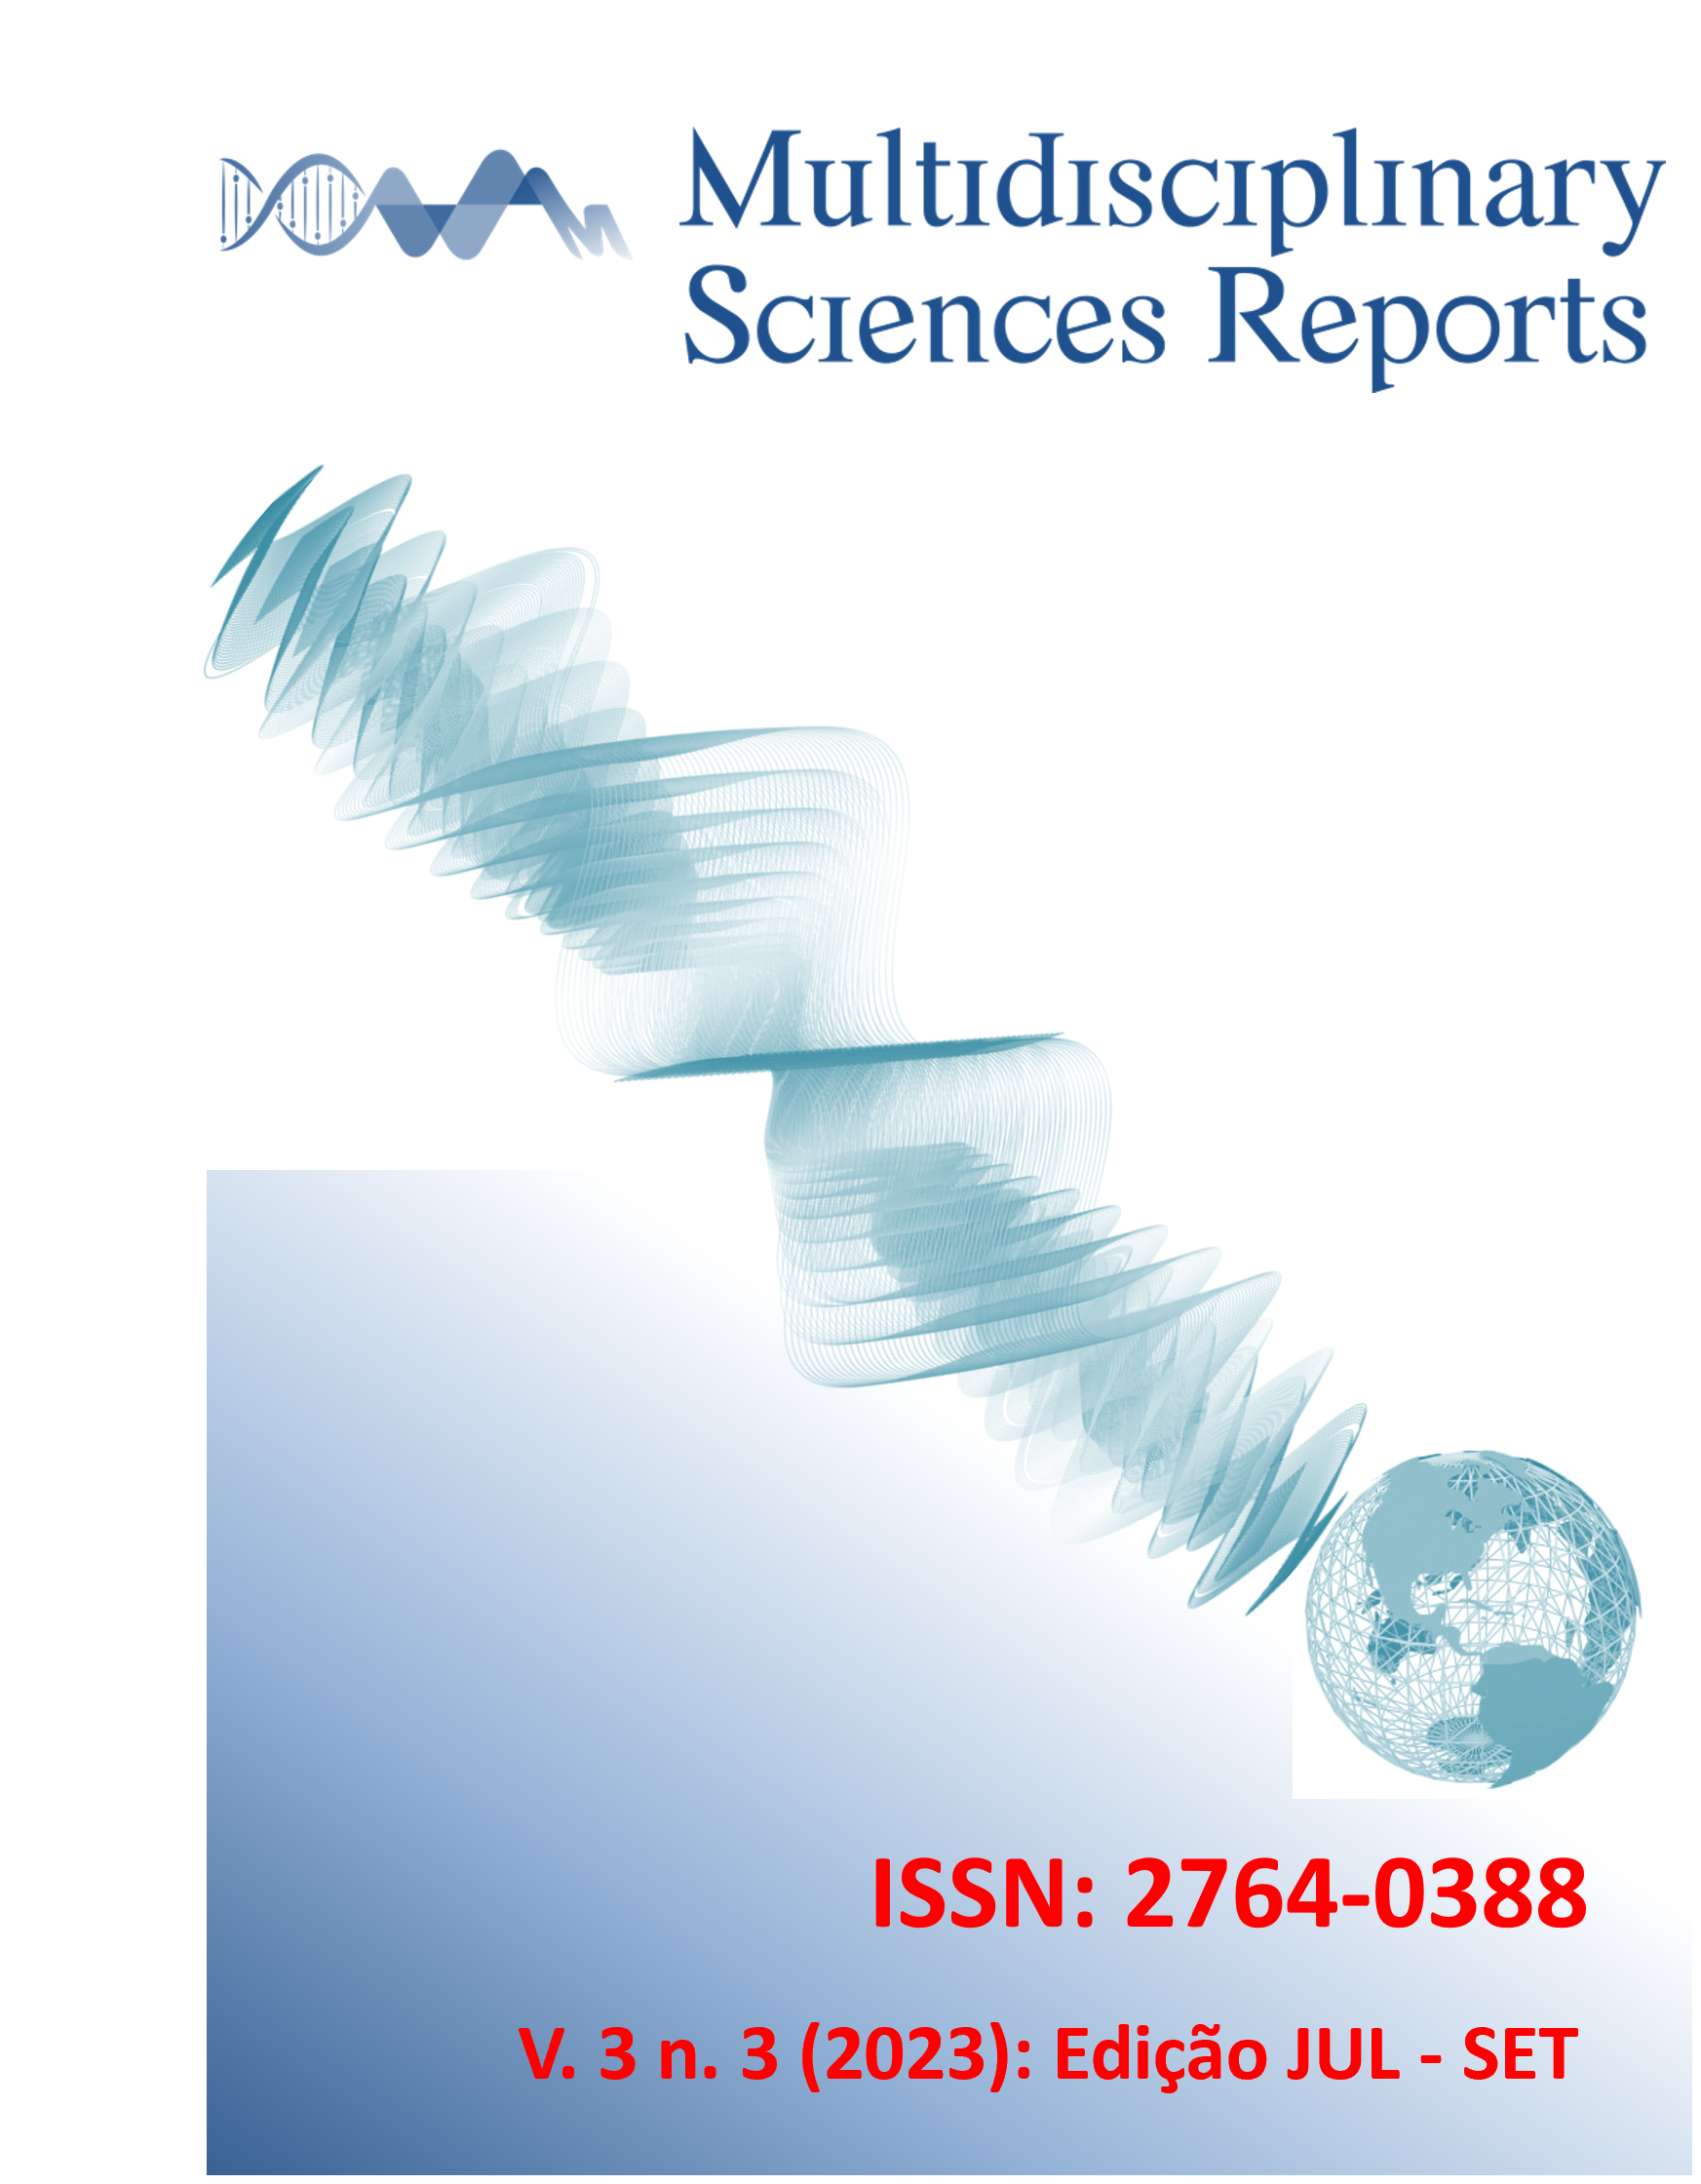 					Visualizar v. 3 n. 3 (2023): Multidisciplinary Sciences Reports
				